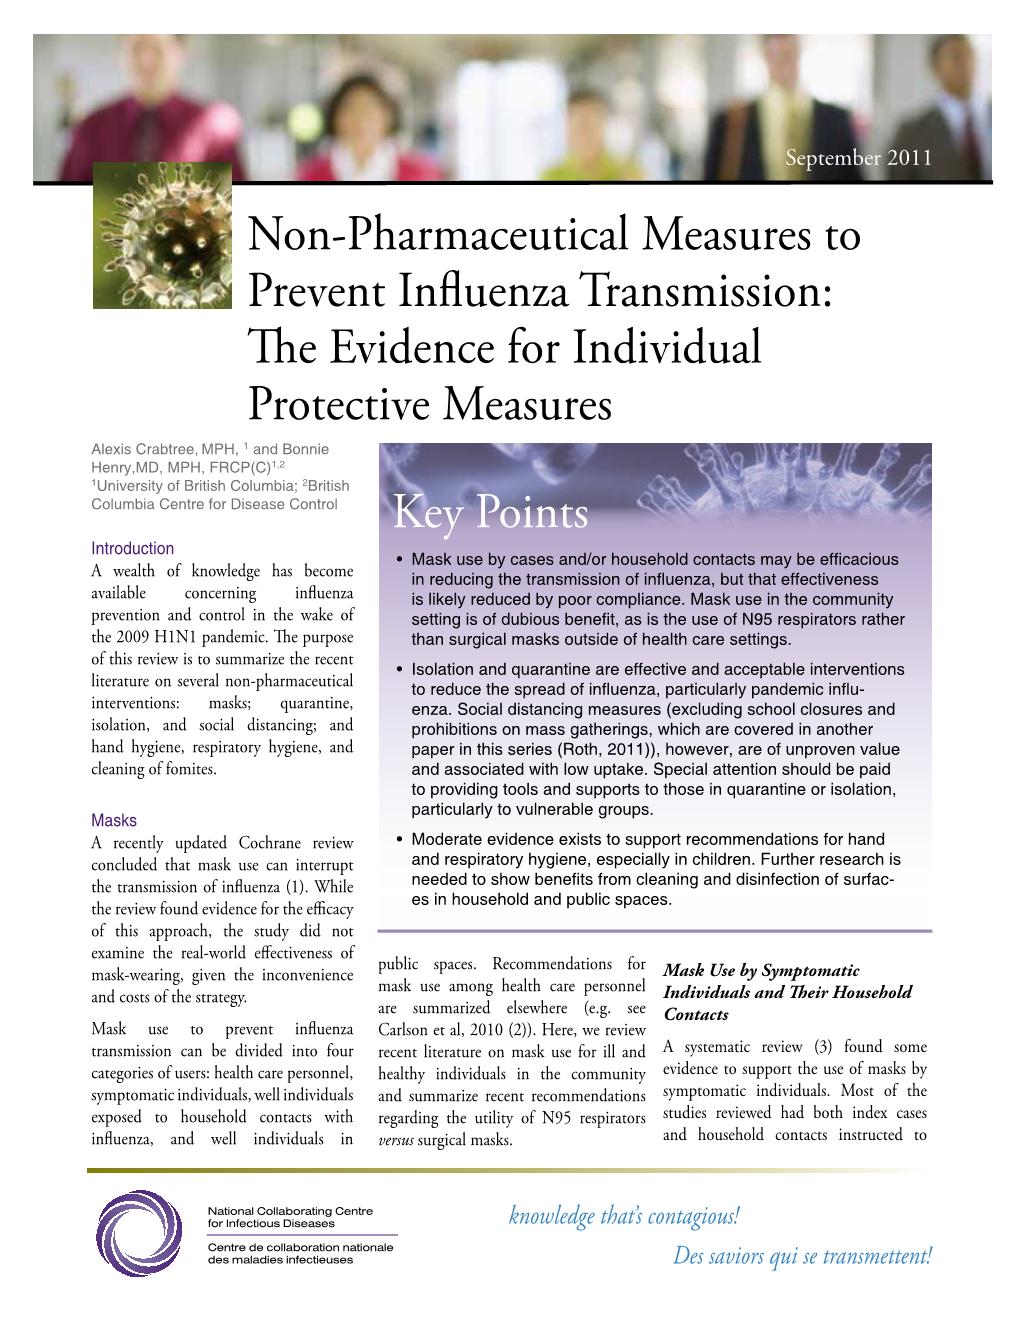 Non-Pharmaceutical Measures to Prevent Influenza Transmission